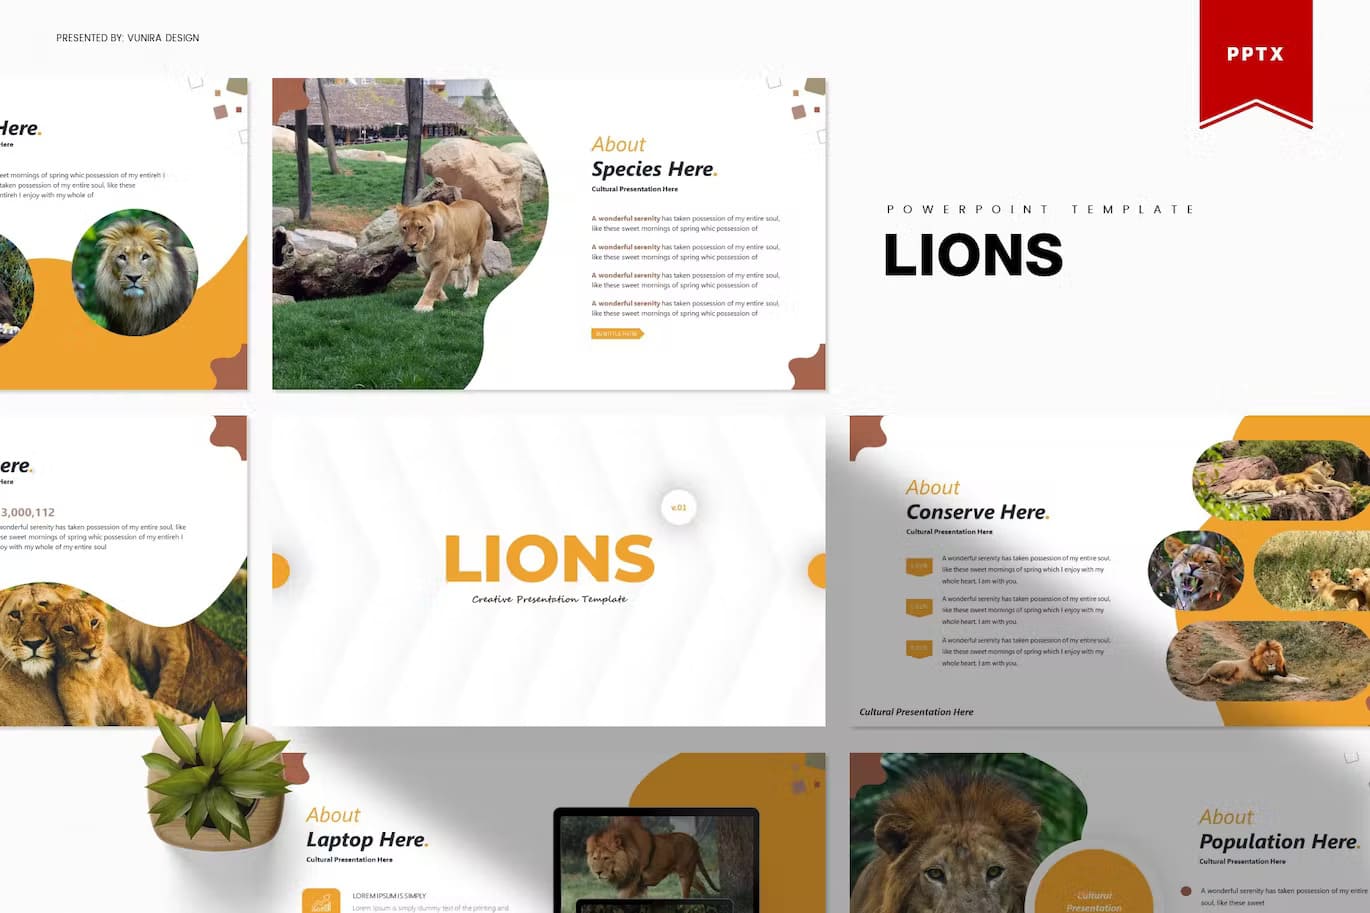 Population of Lions creative presentation template.